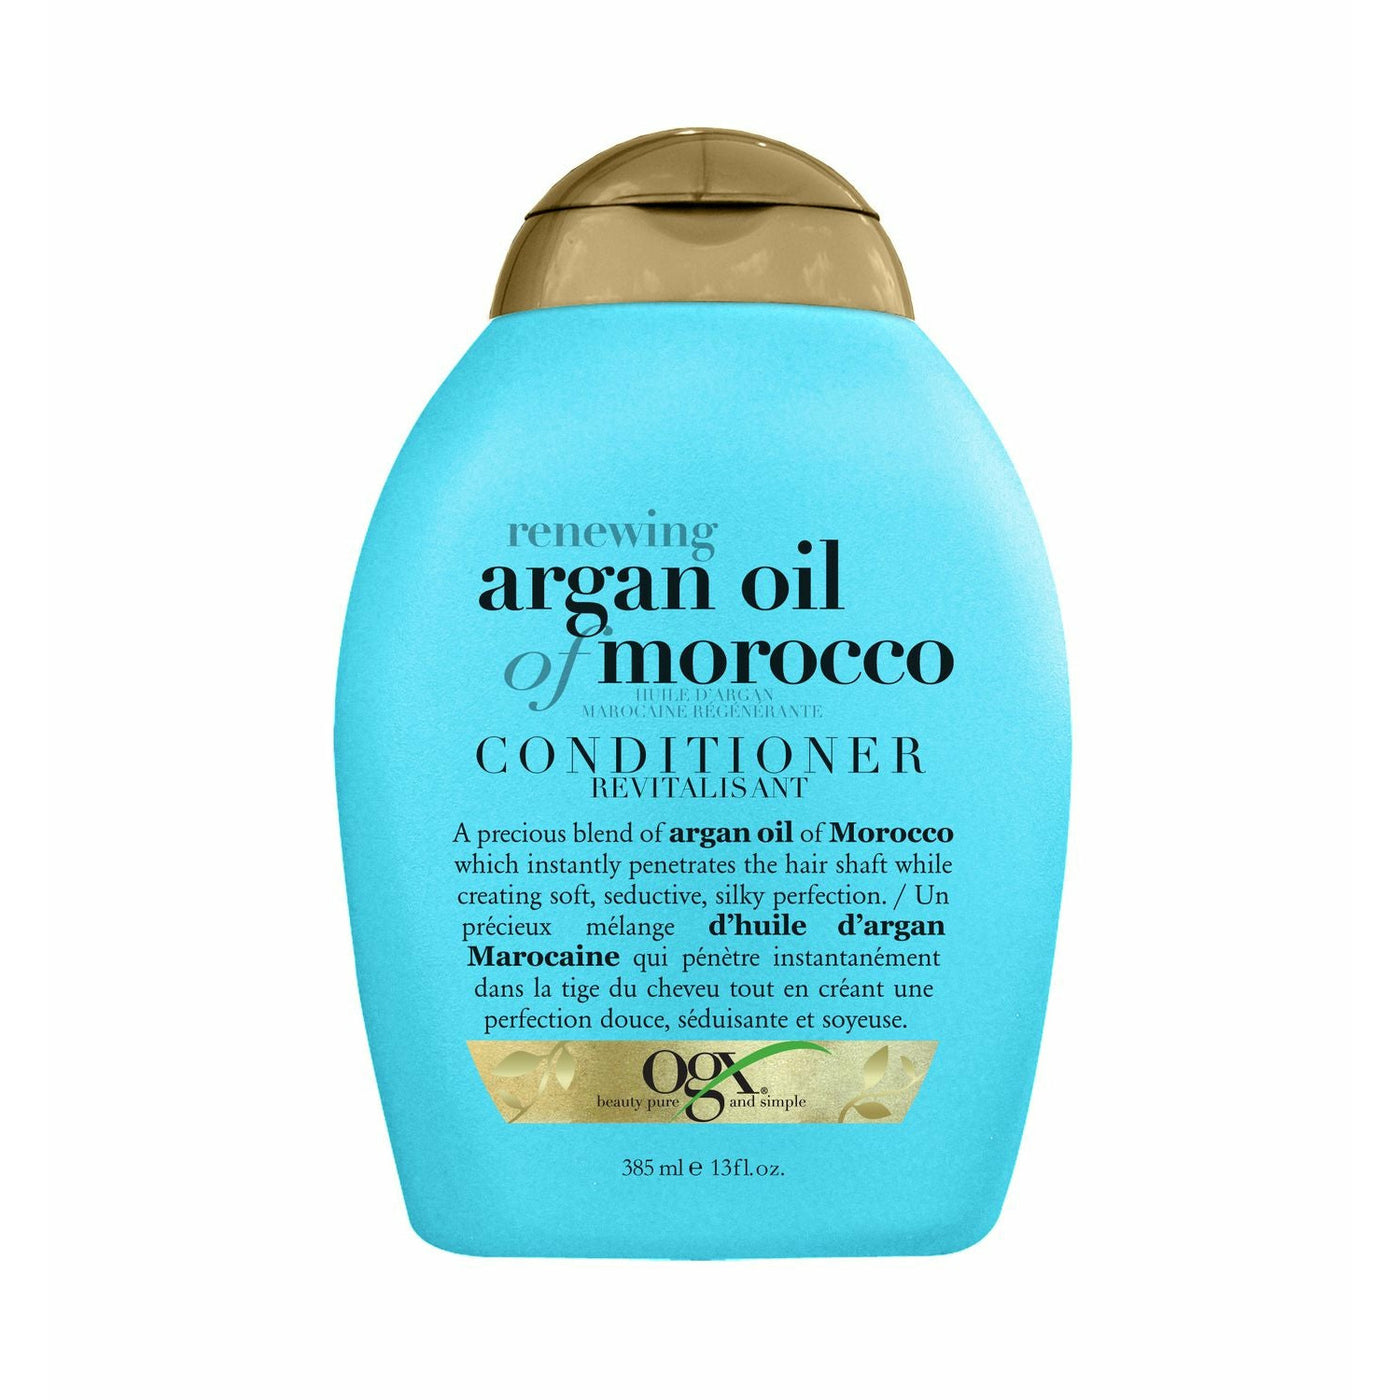 Ogx renewing argan oil of Morocco conditioner - Sfbeautybar